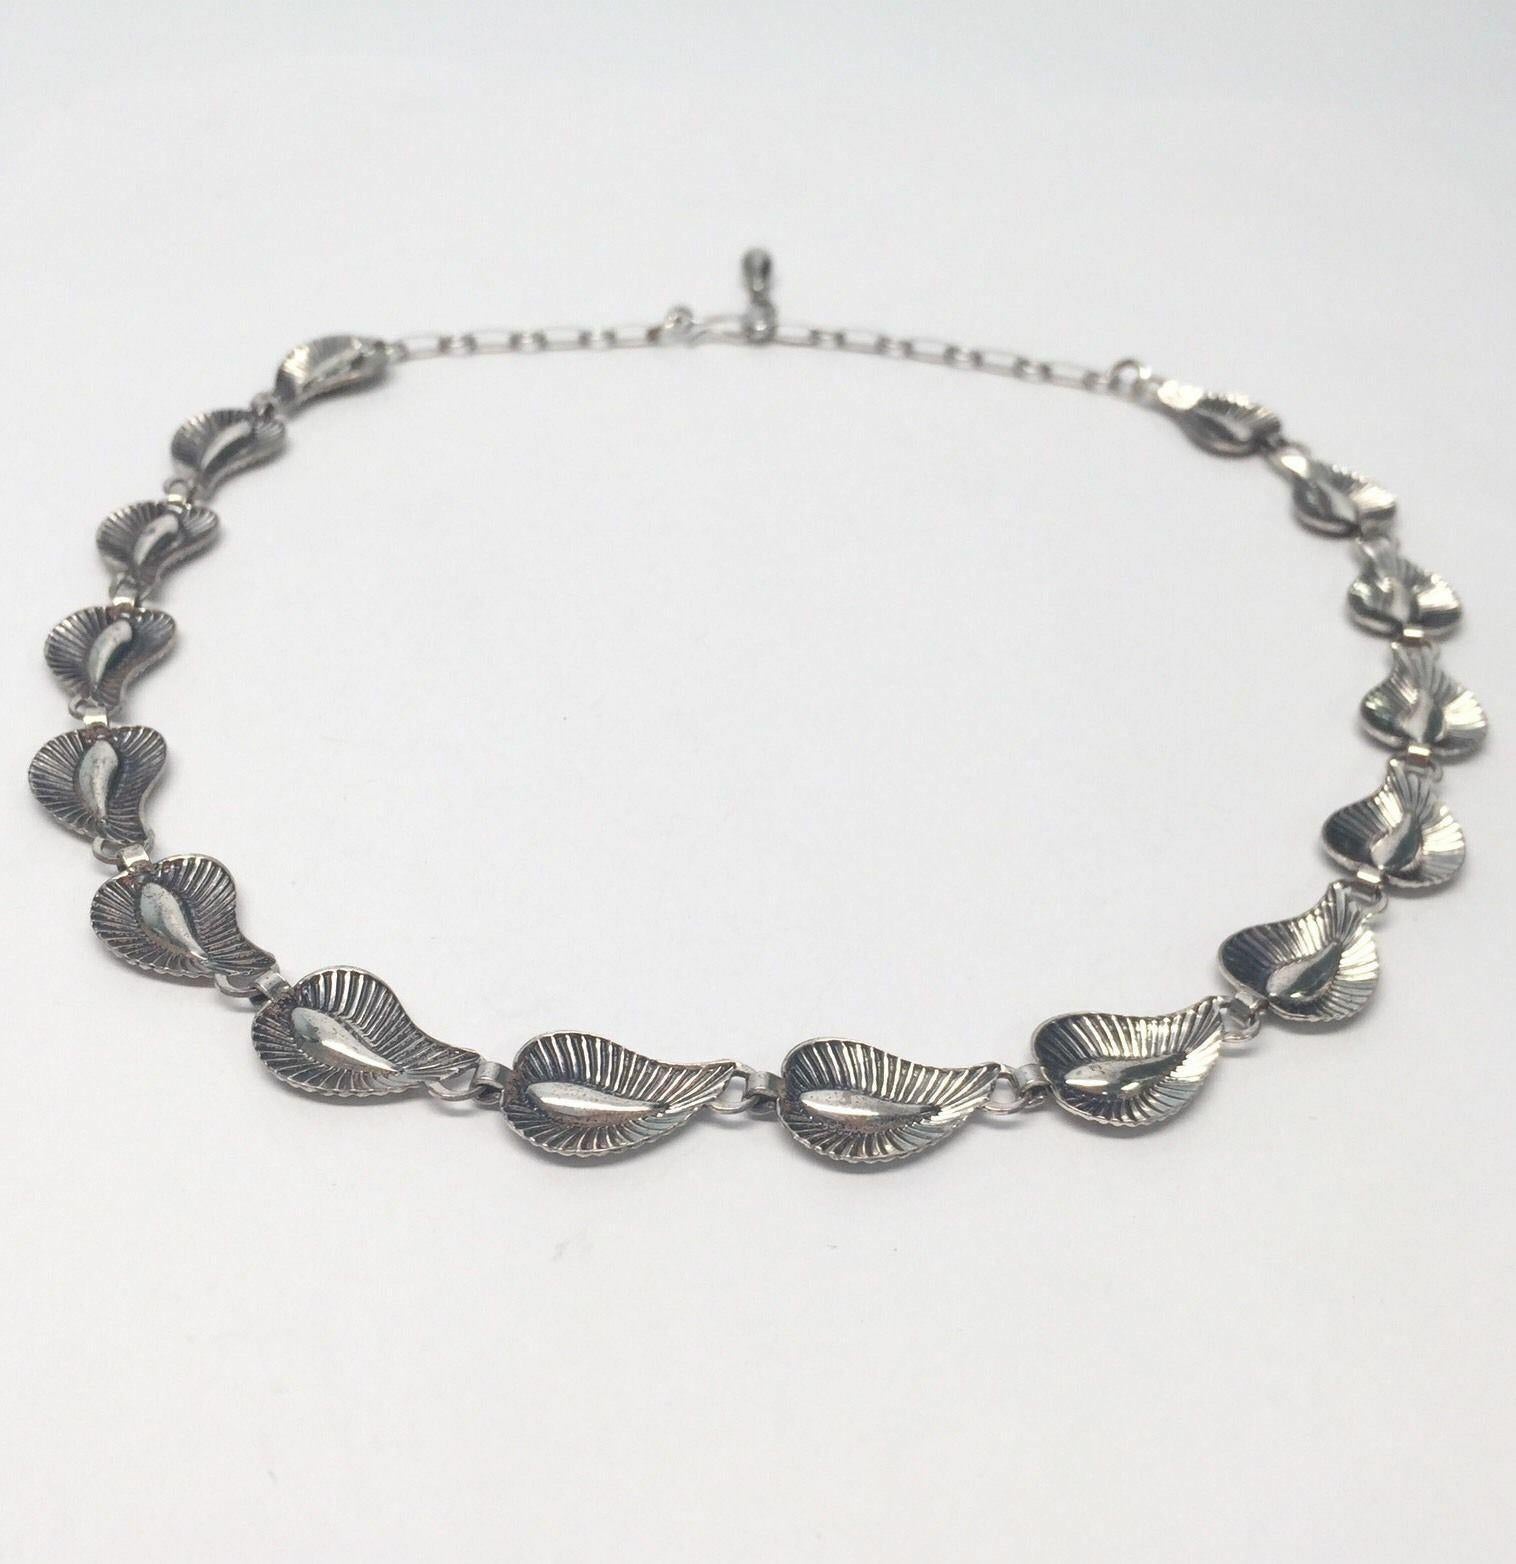 Vintage Danecraft sterling silver small leaf link necklace.

Marking: DANECRAFT ® STERLING.

Measures approx. 17 9/16